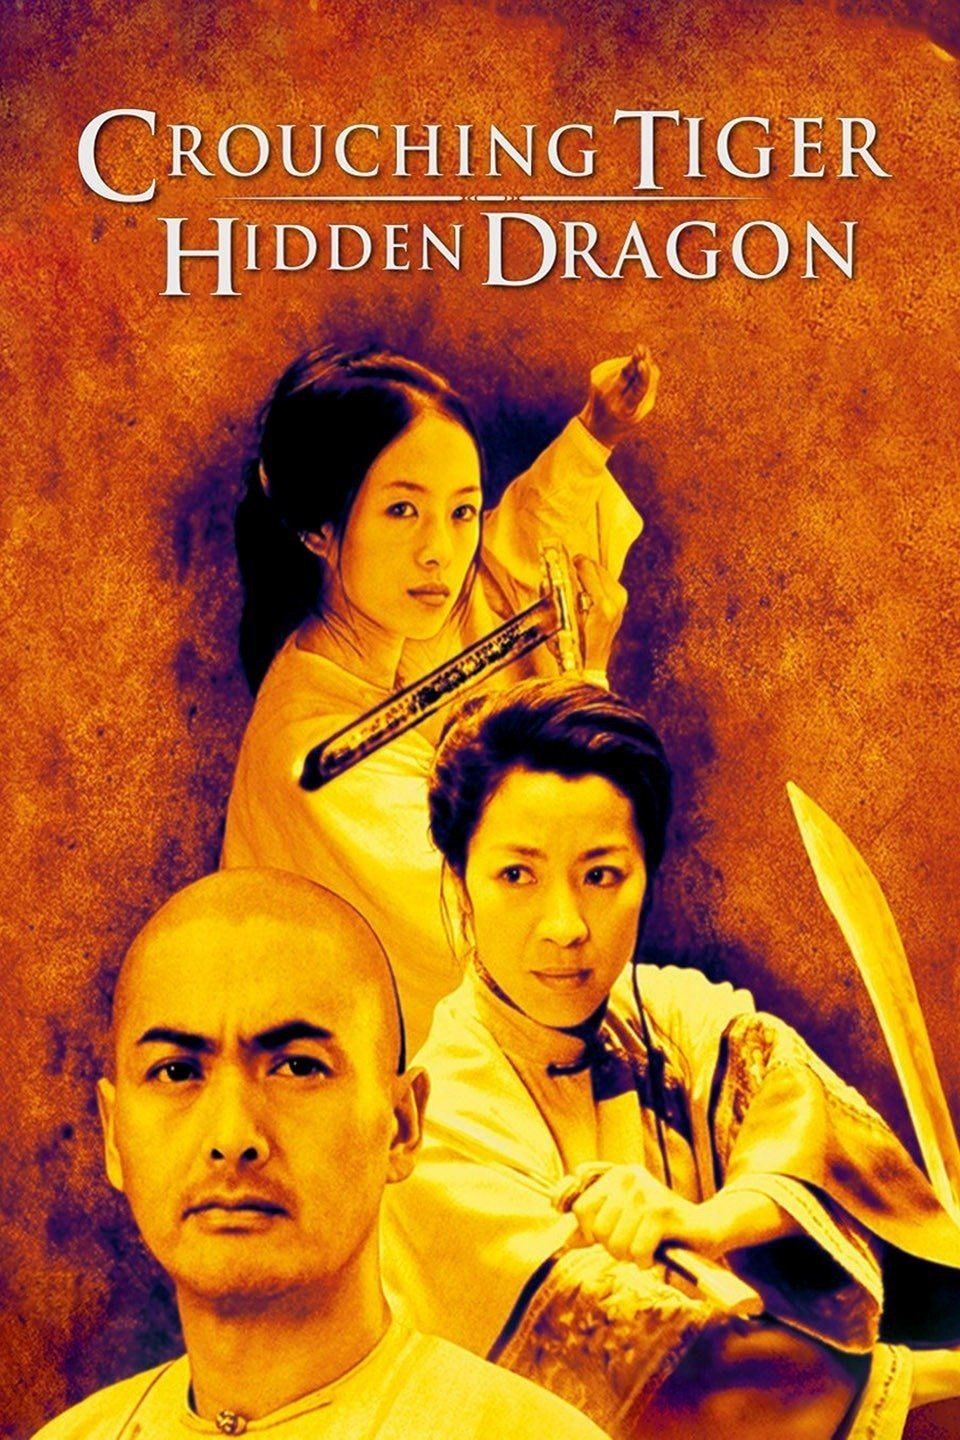 Crouching Tiger, Hidden Dragon - Rotten Tomatoes